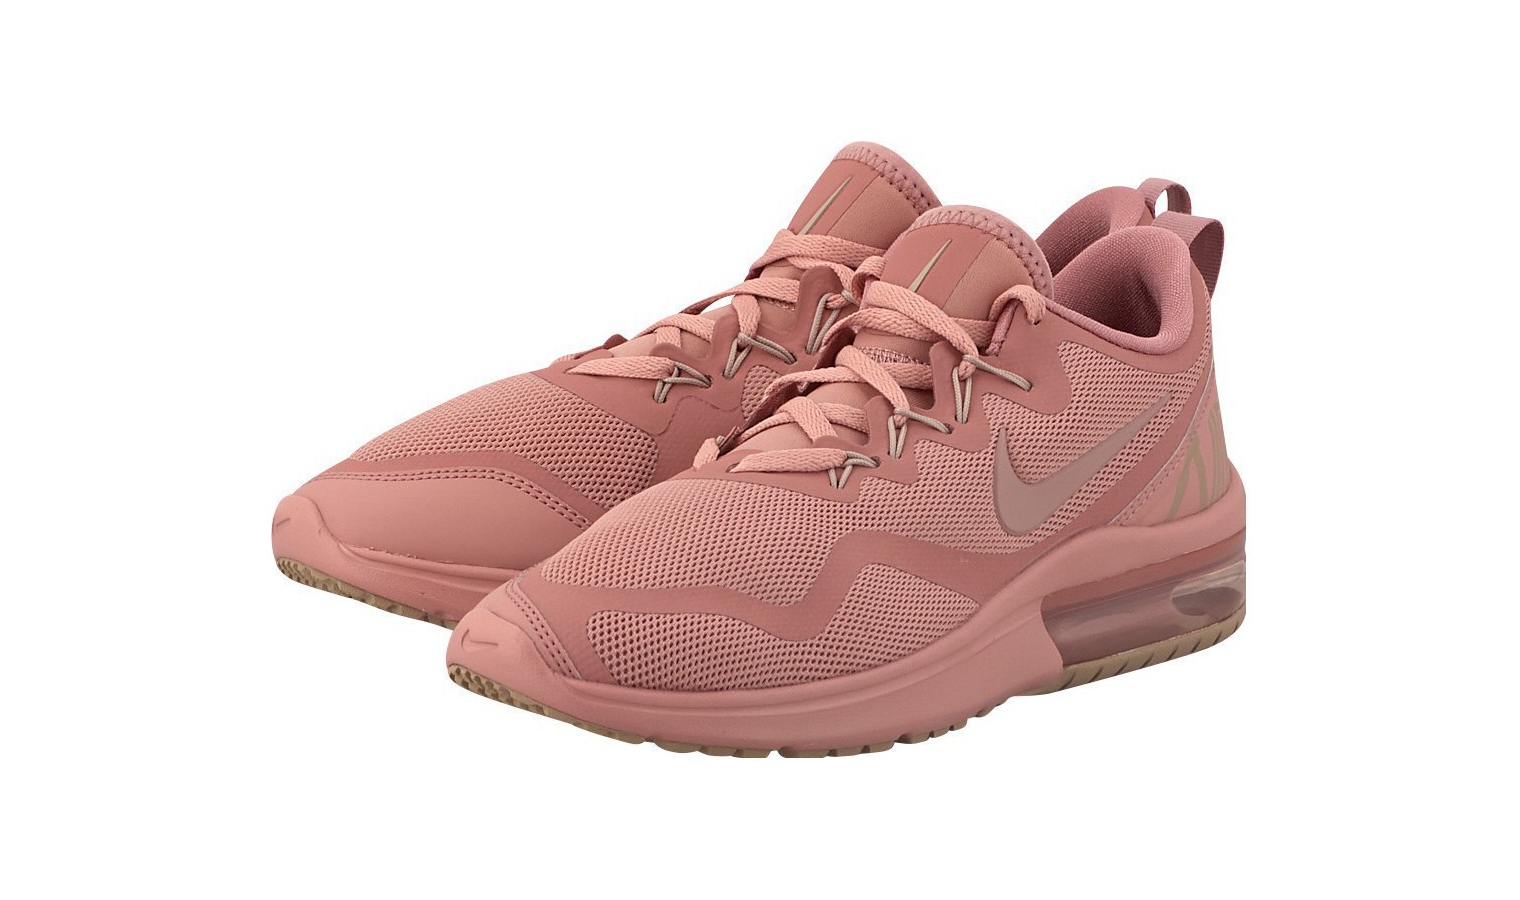 Womens sneakers Nike AIR FURY W pink | AD Sport.store